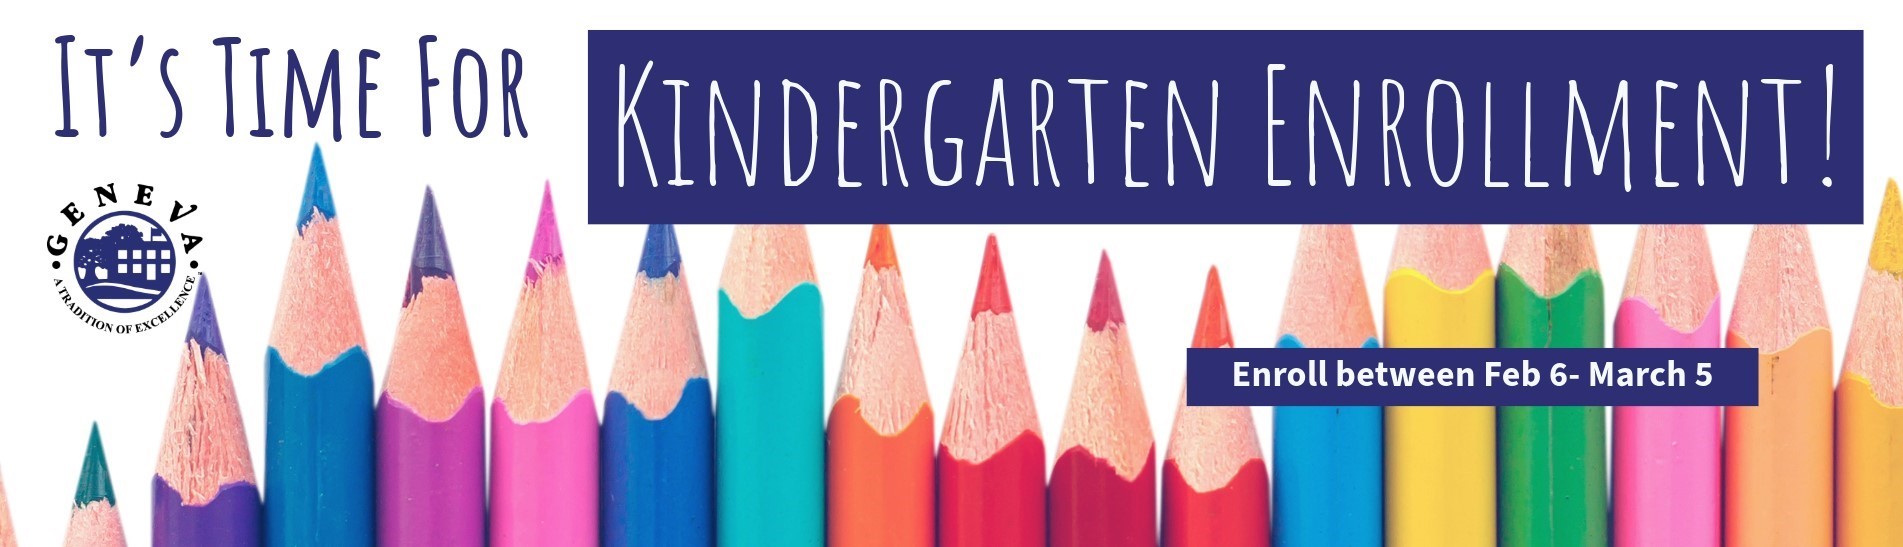 Kindergarten enrollment starts Tues February 6